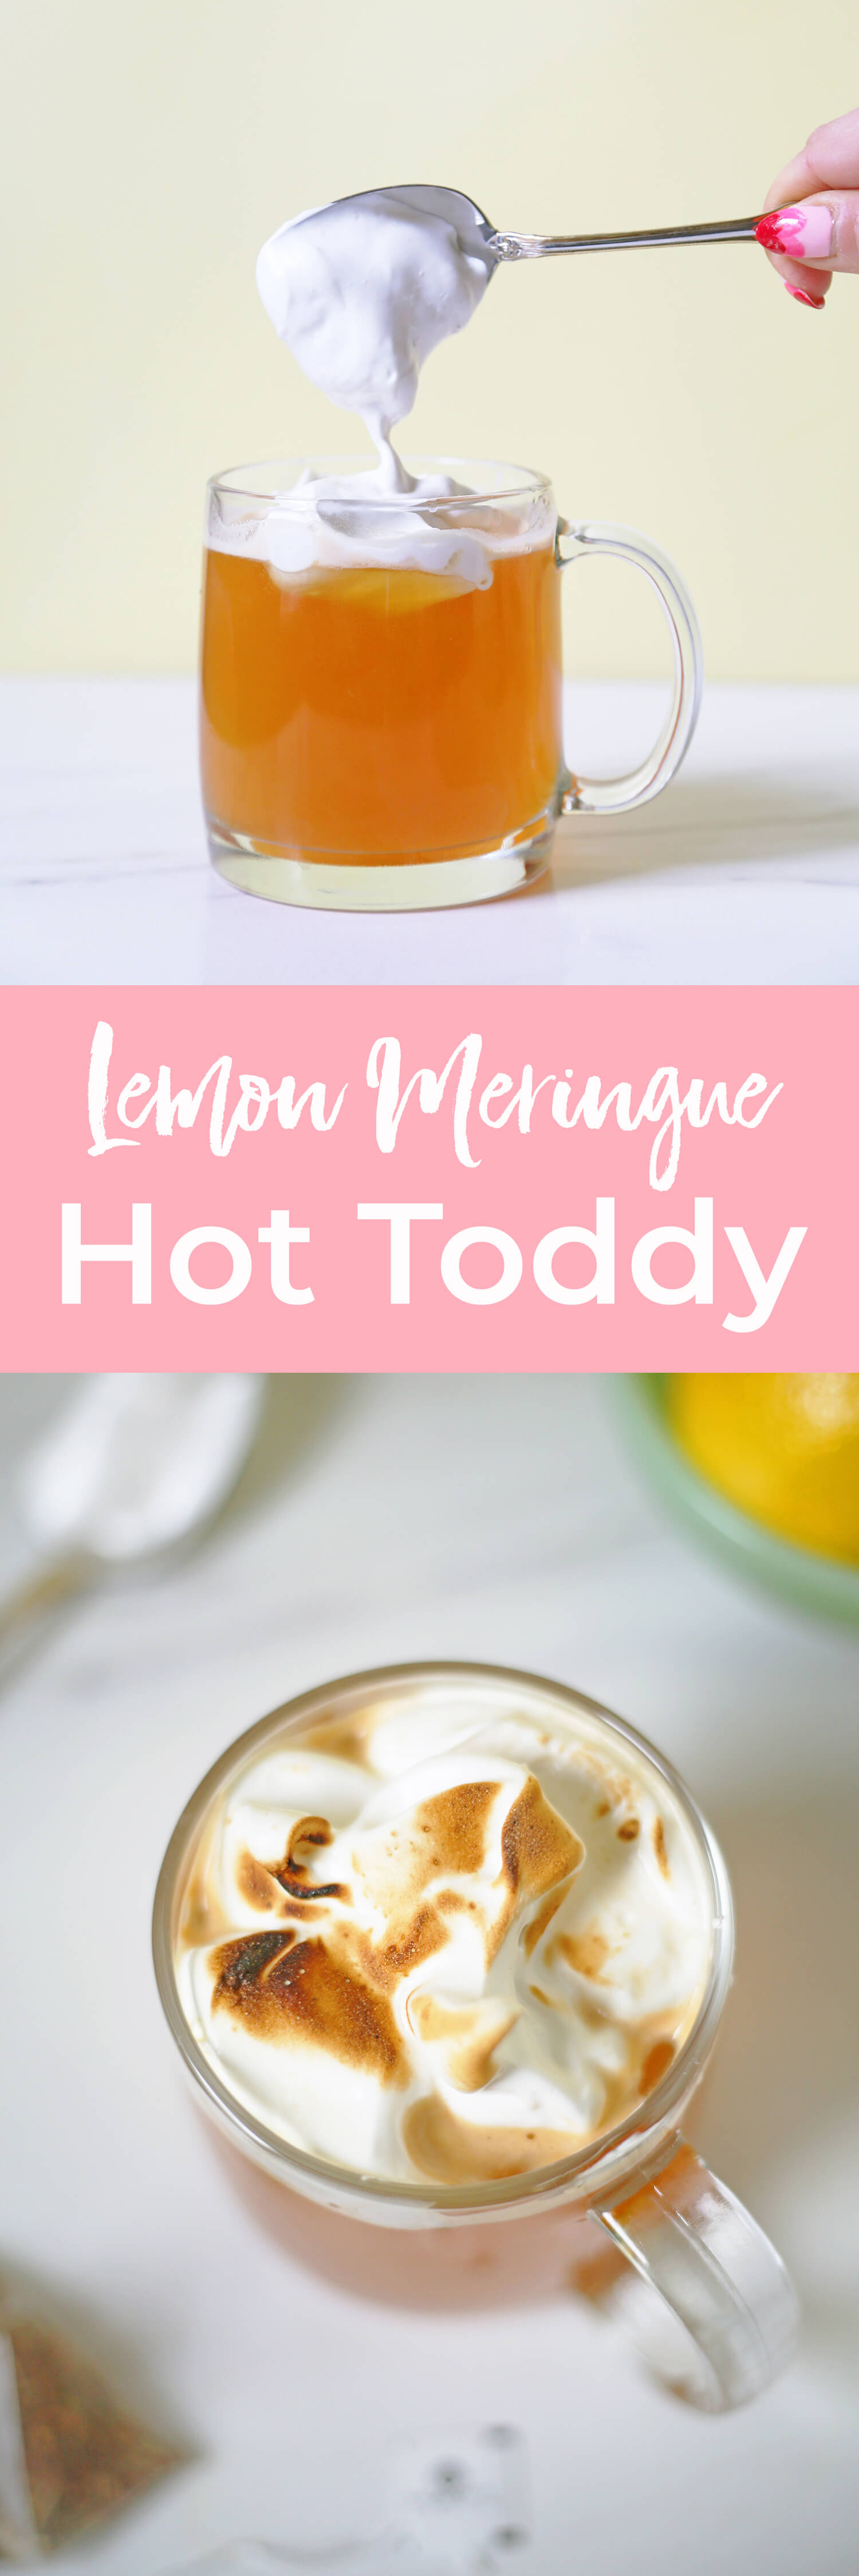 Lemon Meringue Hot Toddy